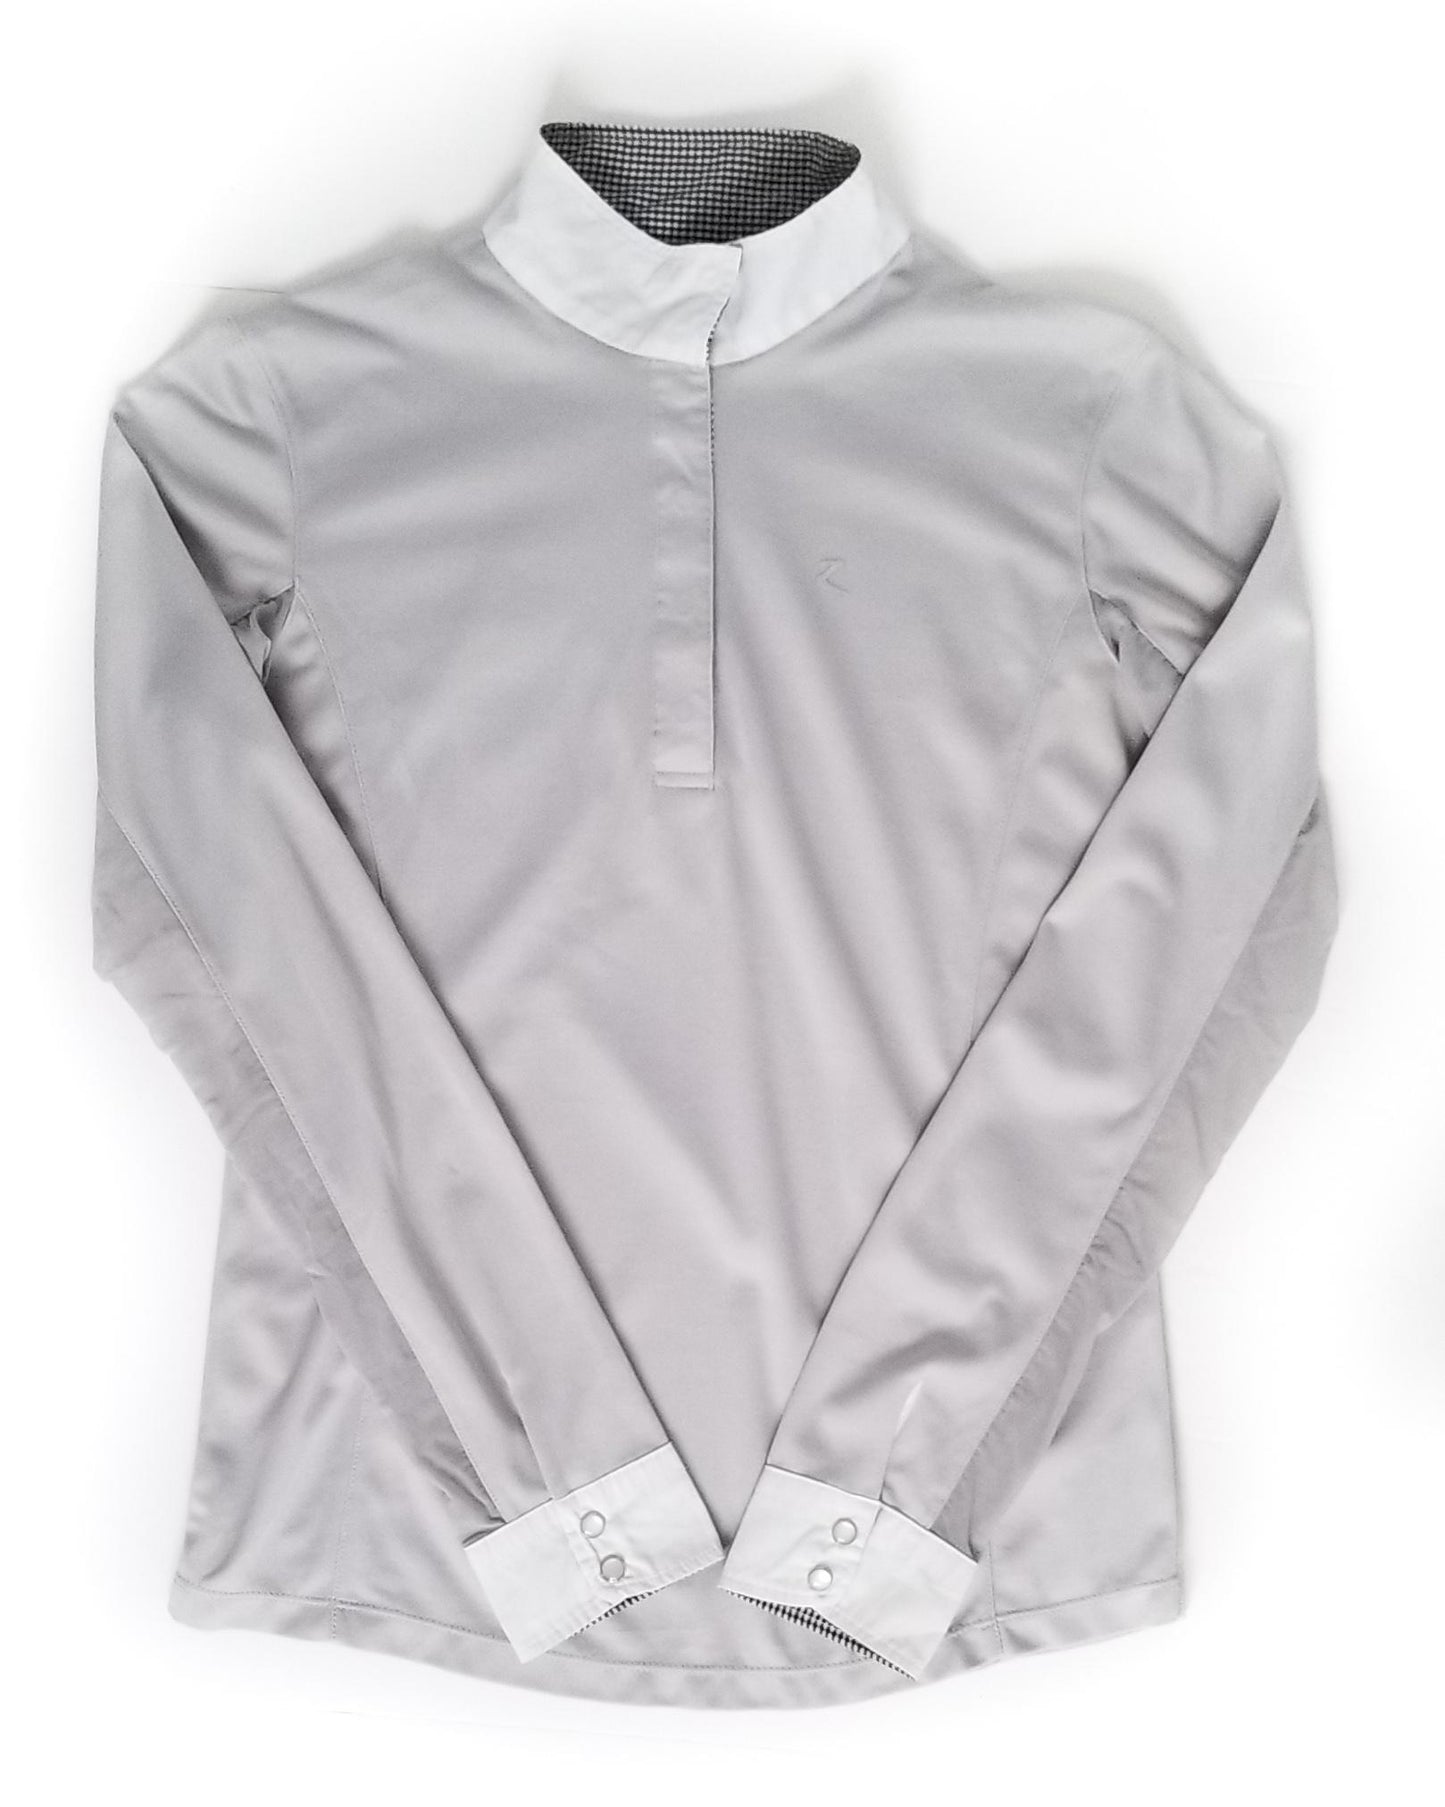 Horze Blaire Long Sleeve Show Shirt- Grey - Women's Size 8 (Small)